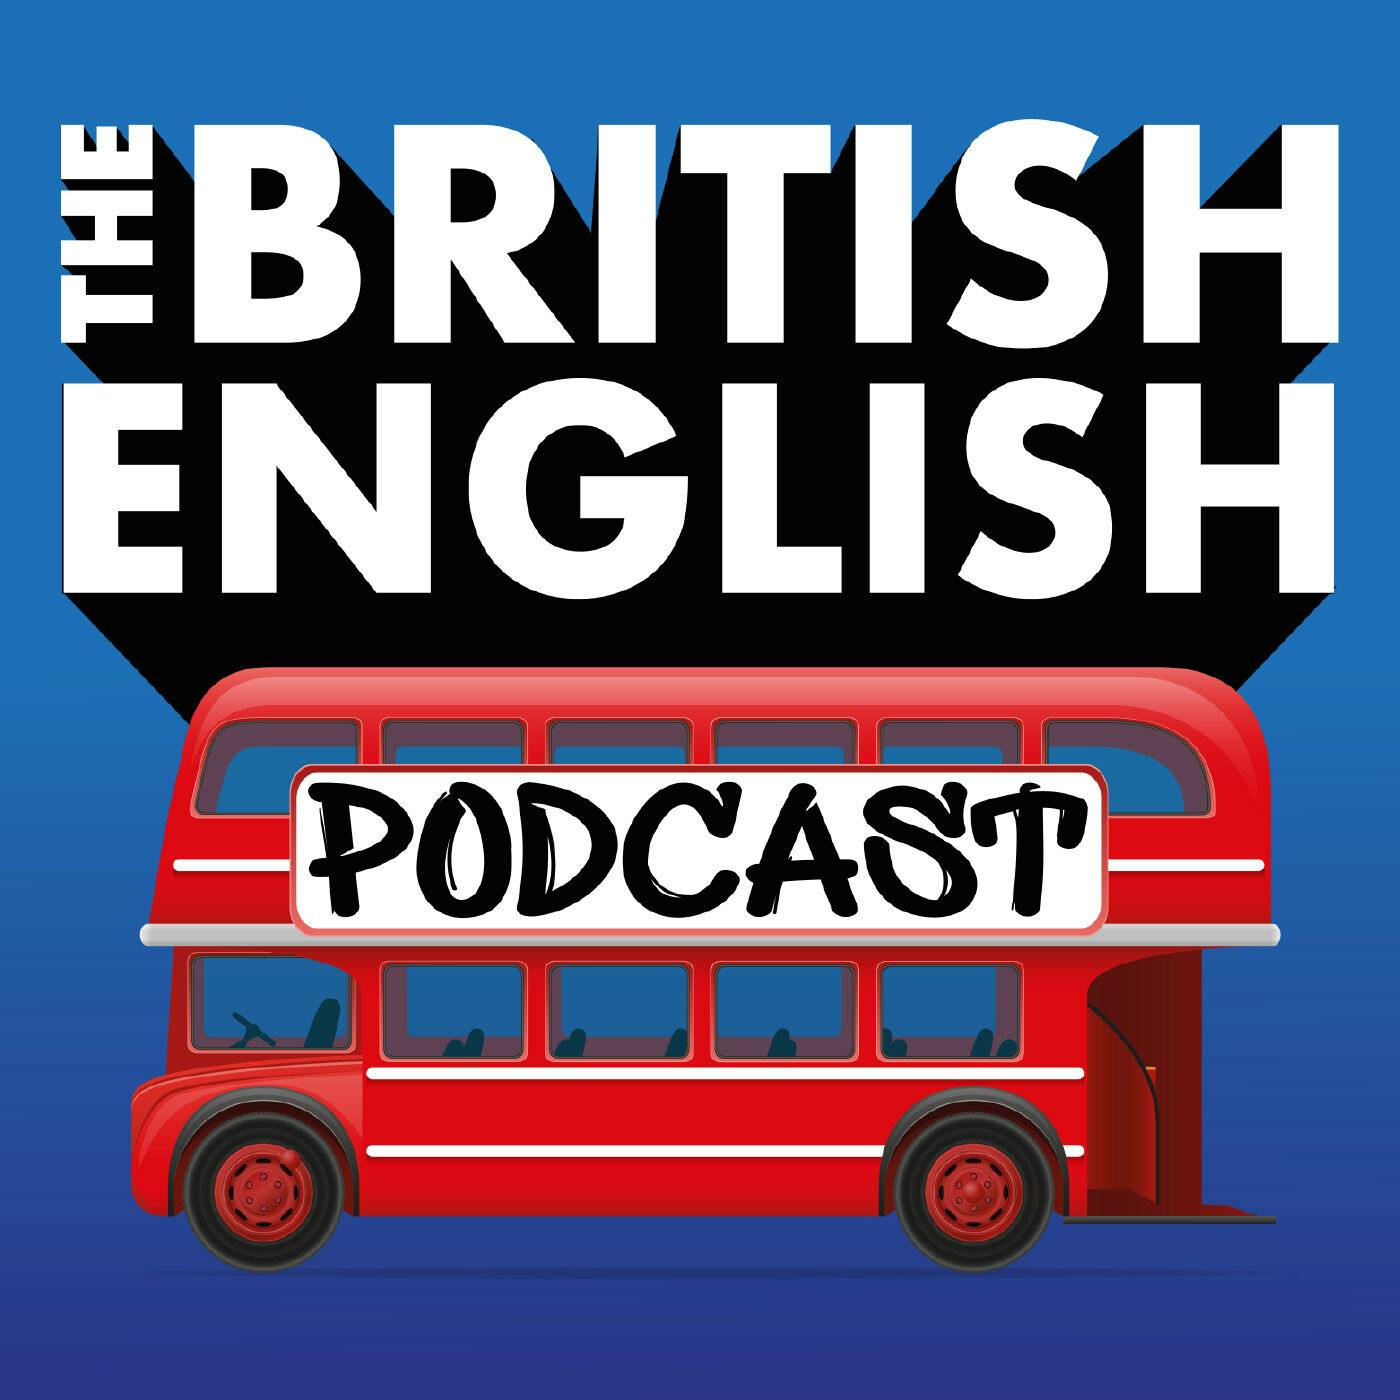 The British English Podcast podcast show image